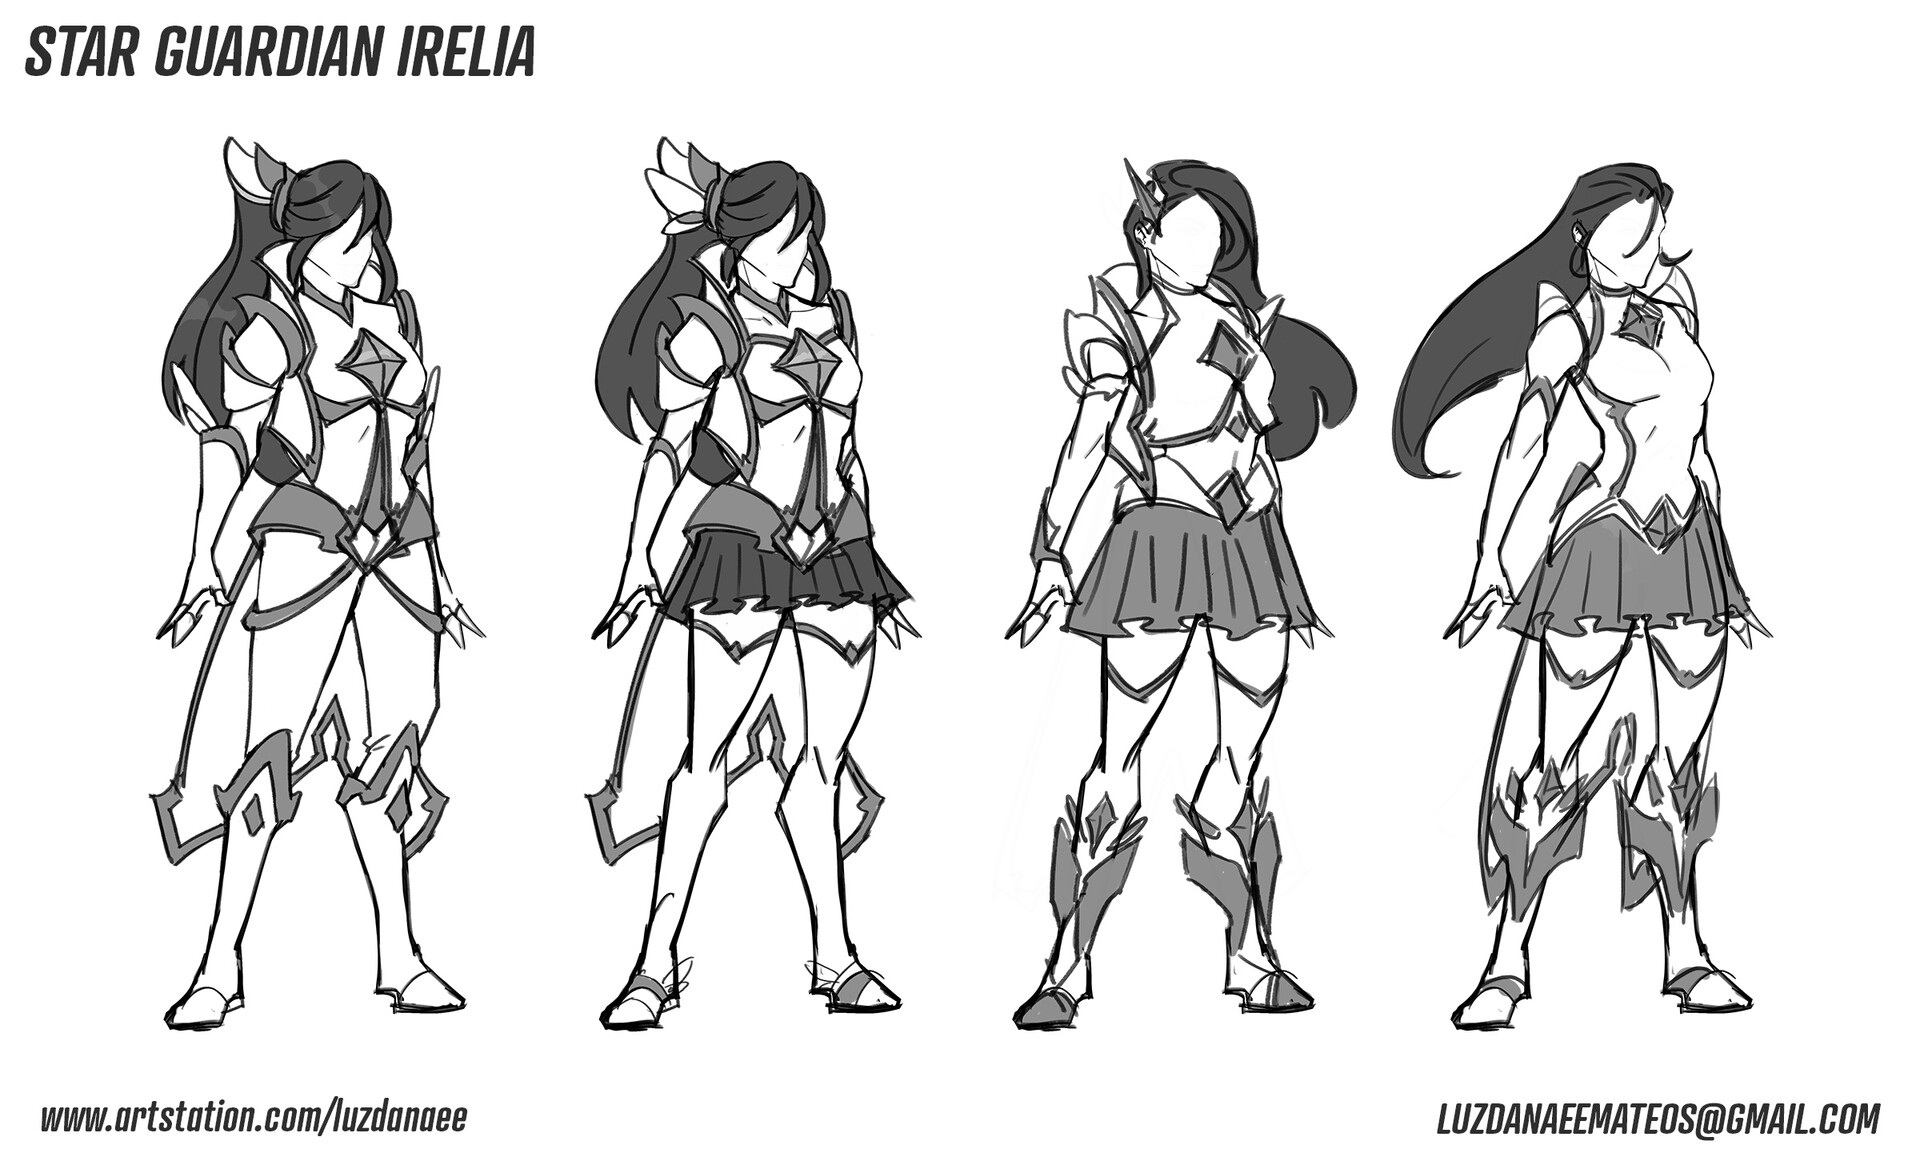 Star Guardian Irelia beginning sketch concepts